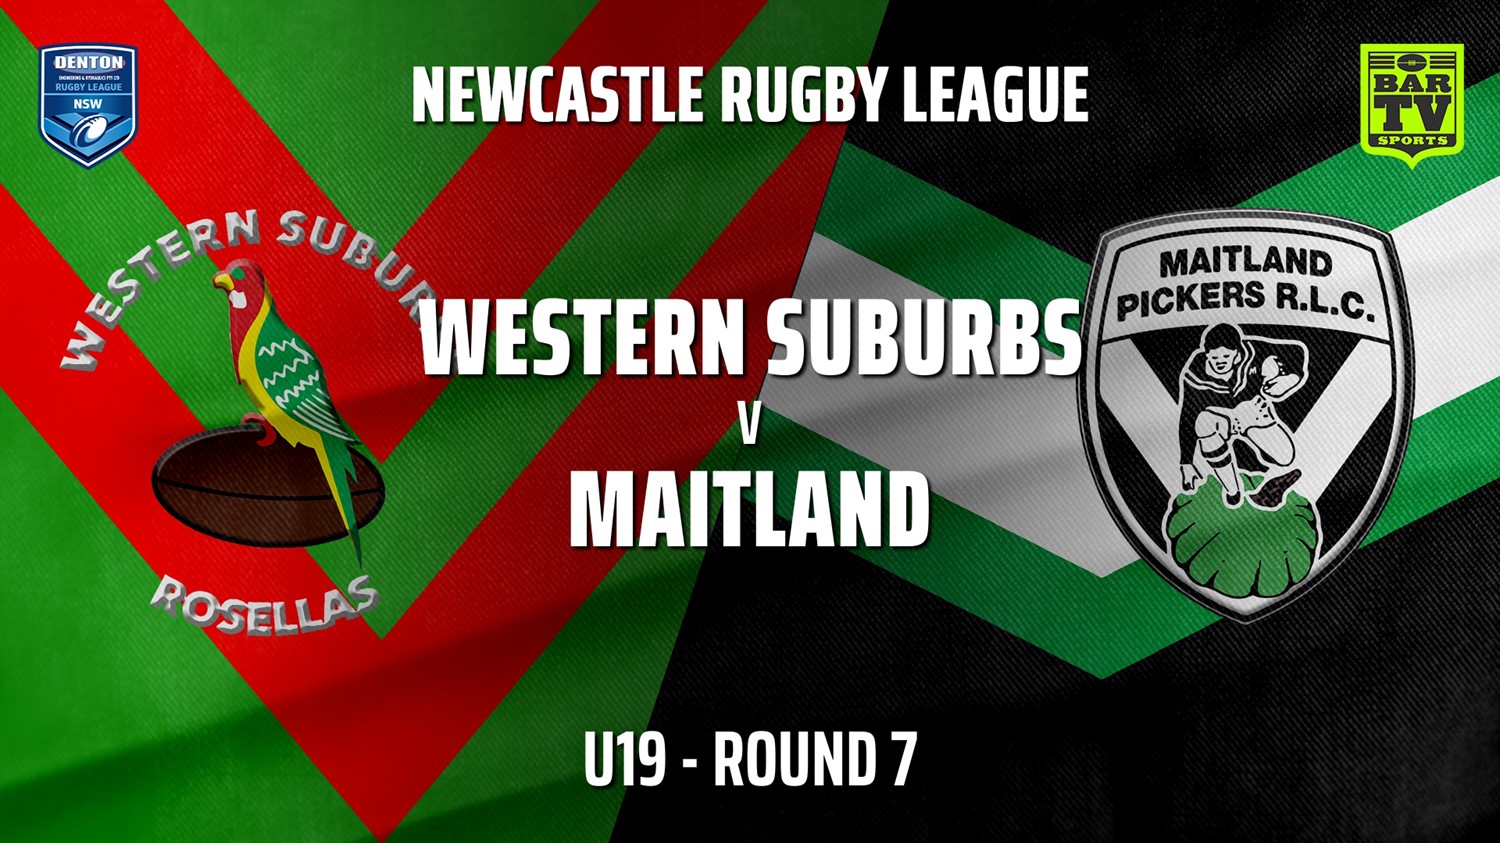 210508-Newcastle Rugby League Round 7 - U19 - Western Suburbs Rosellas v Maitland Pickers Slate Image